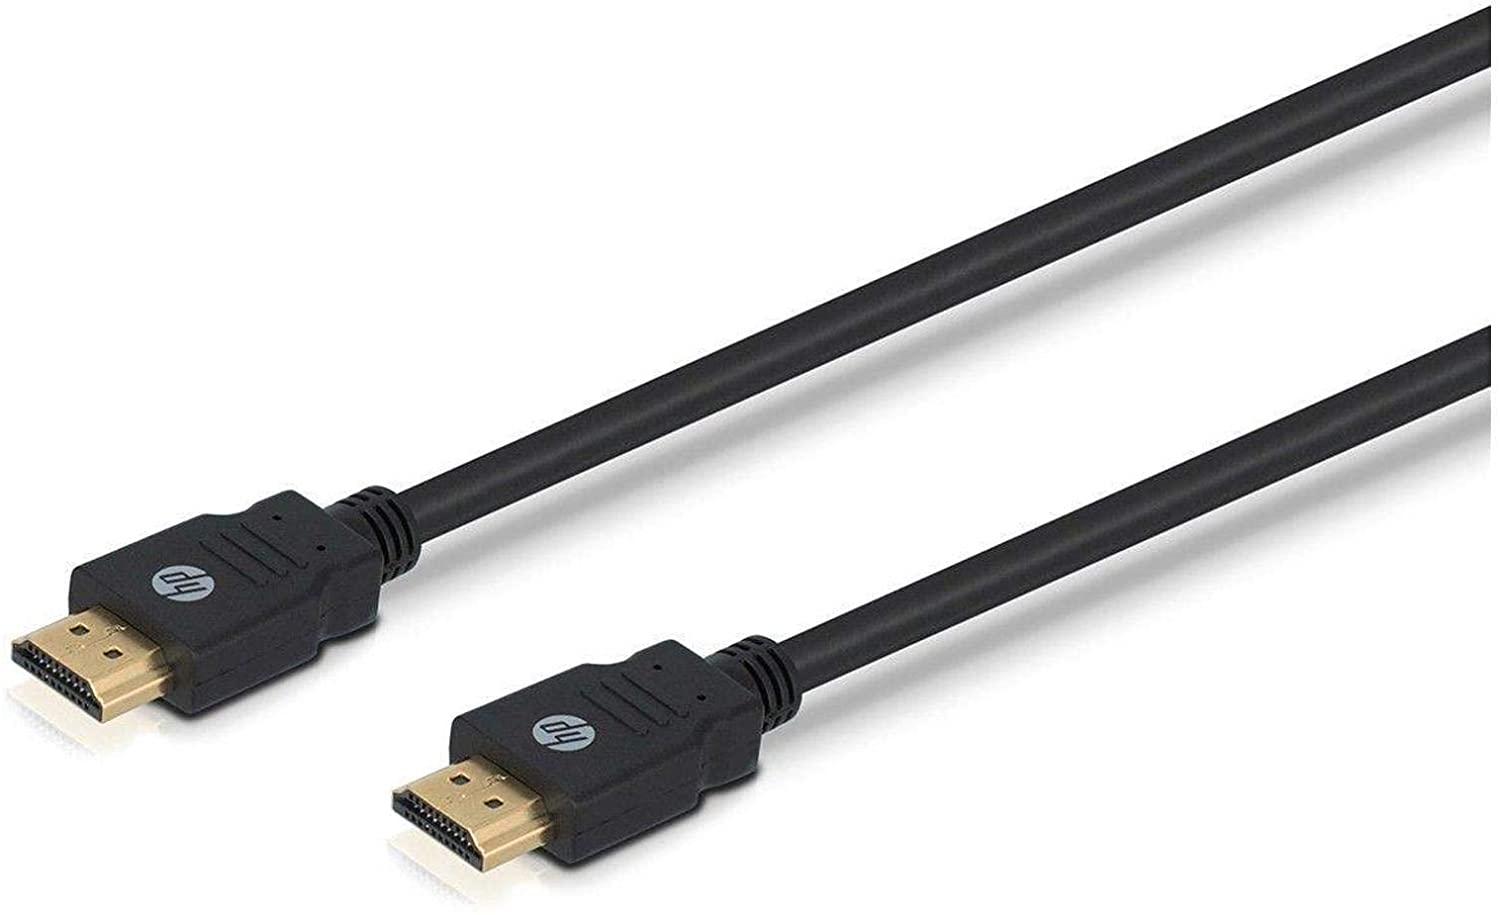 HP HDMI Cable, 3 Meters, Black - HP001GBBLK3TW